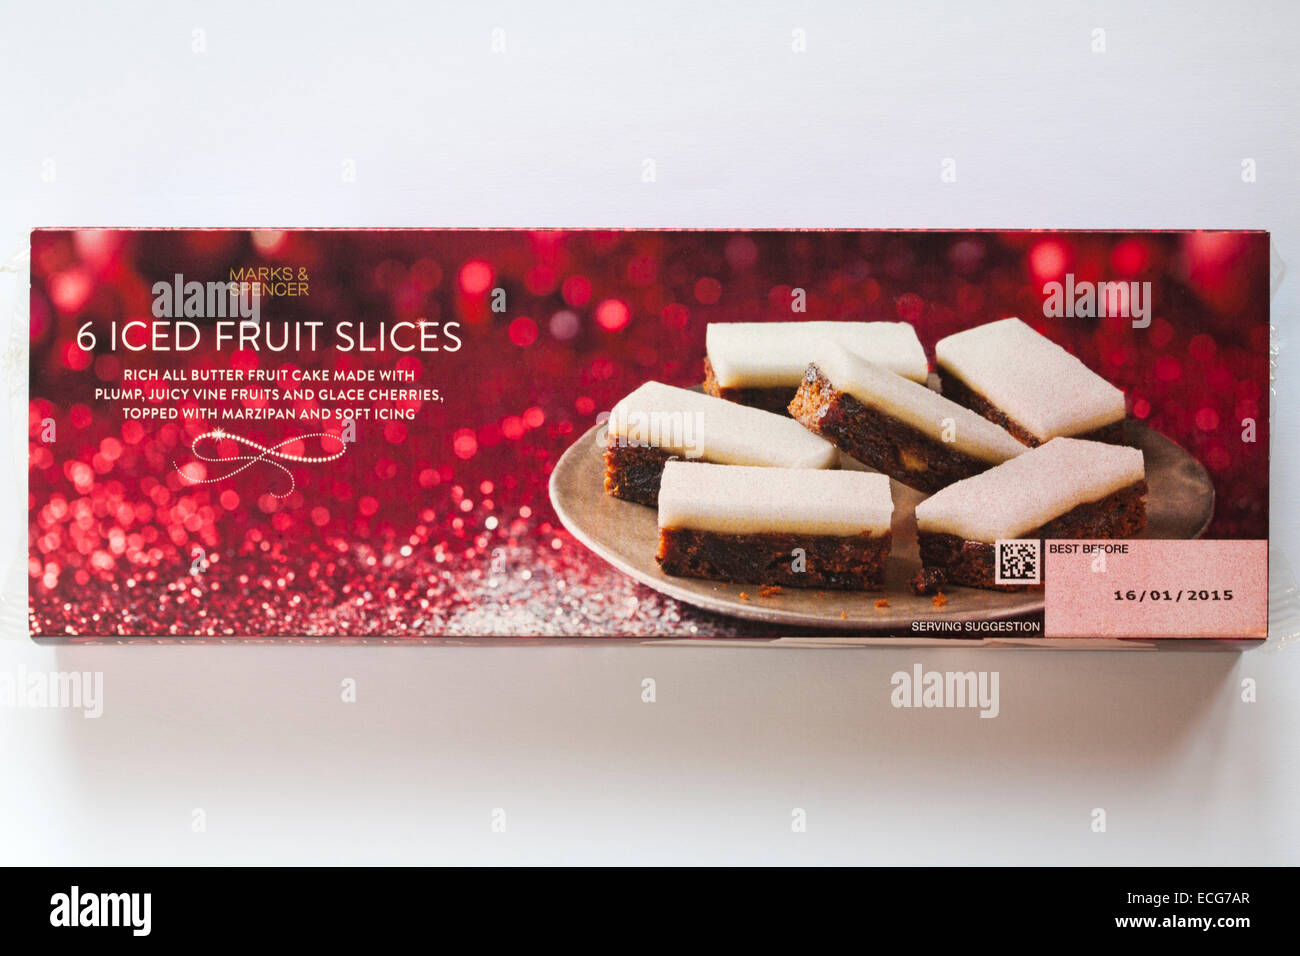 box of Marks & Spencer 6 Iced Fruit Slices isolated on white background Stock Photo